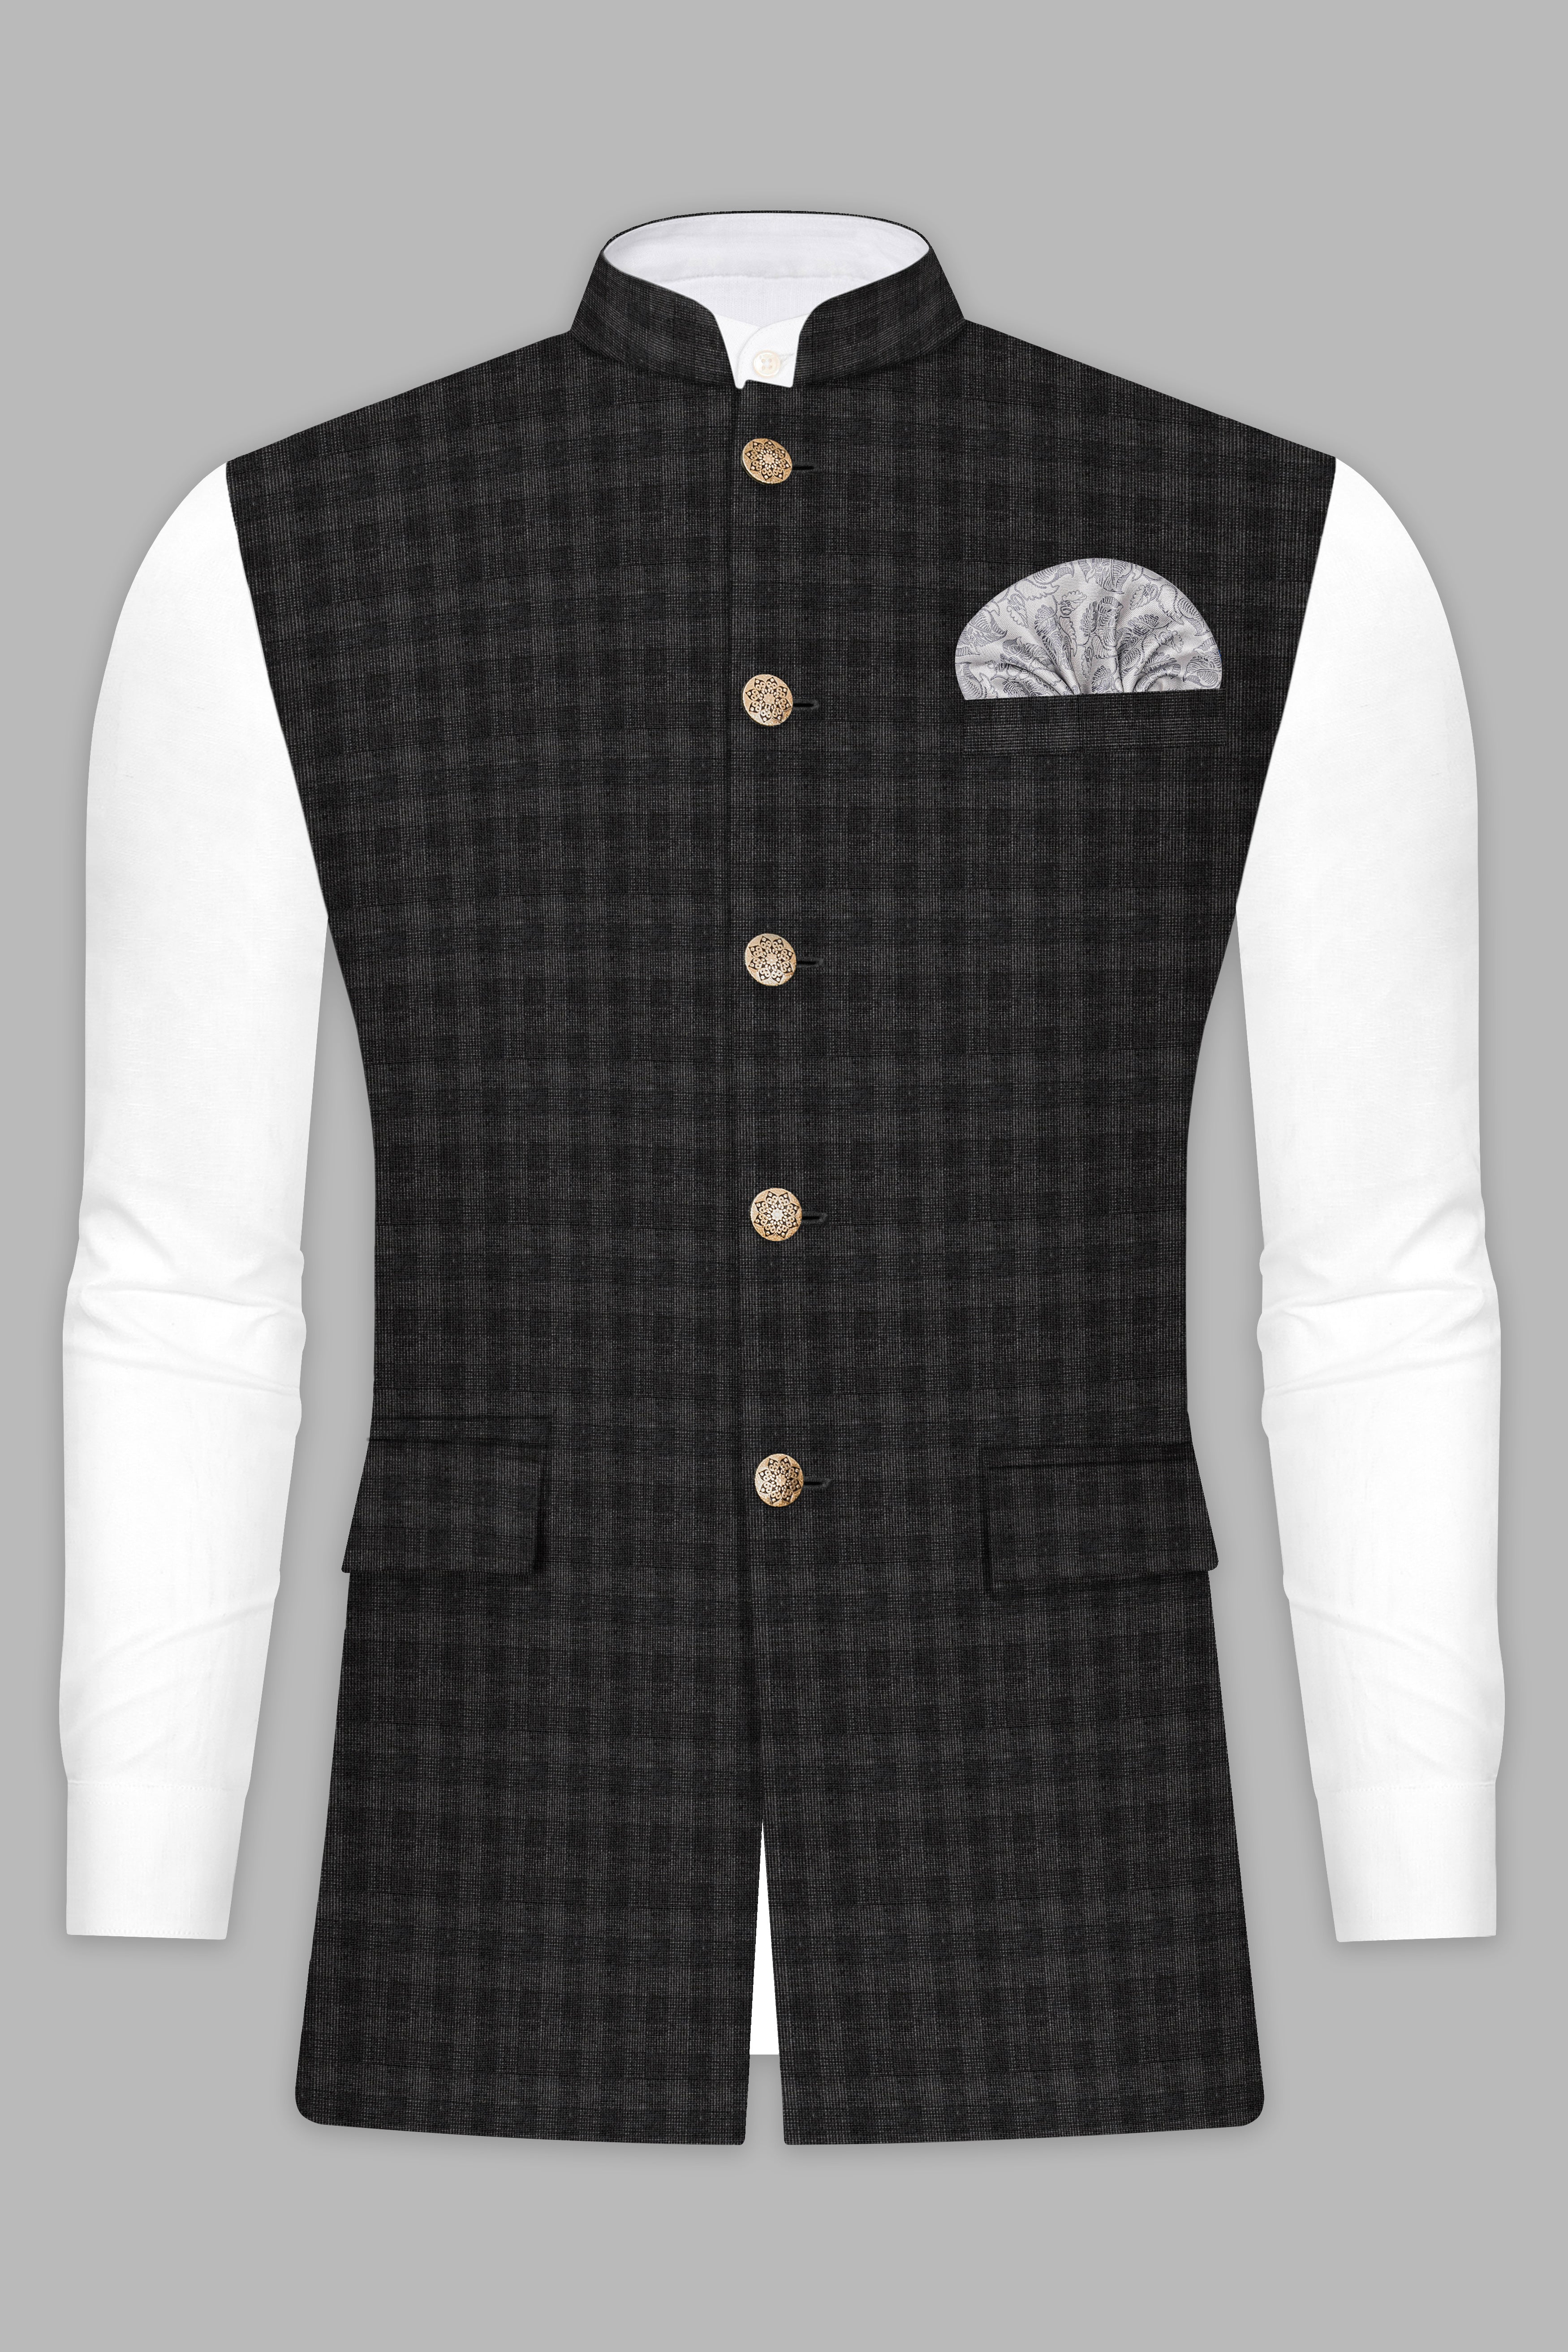 Thunder Gray Plaid Wool Rich Nehru jacket